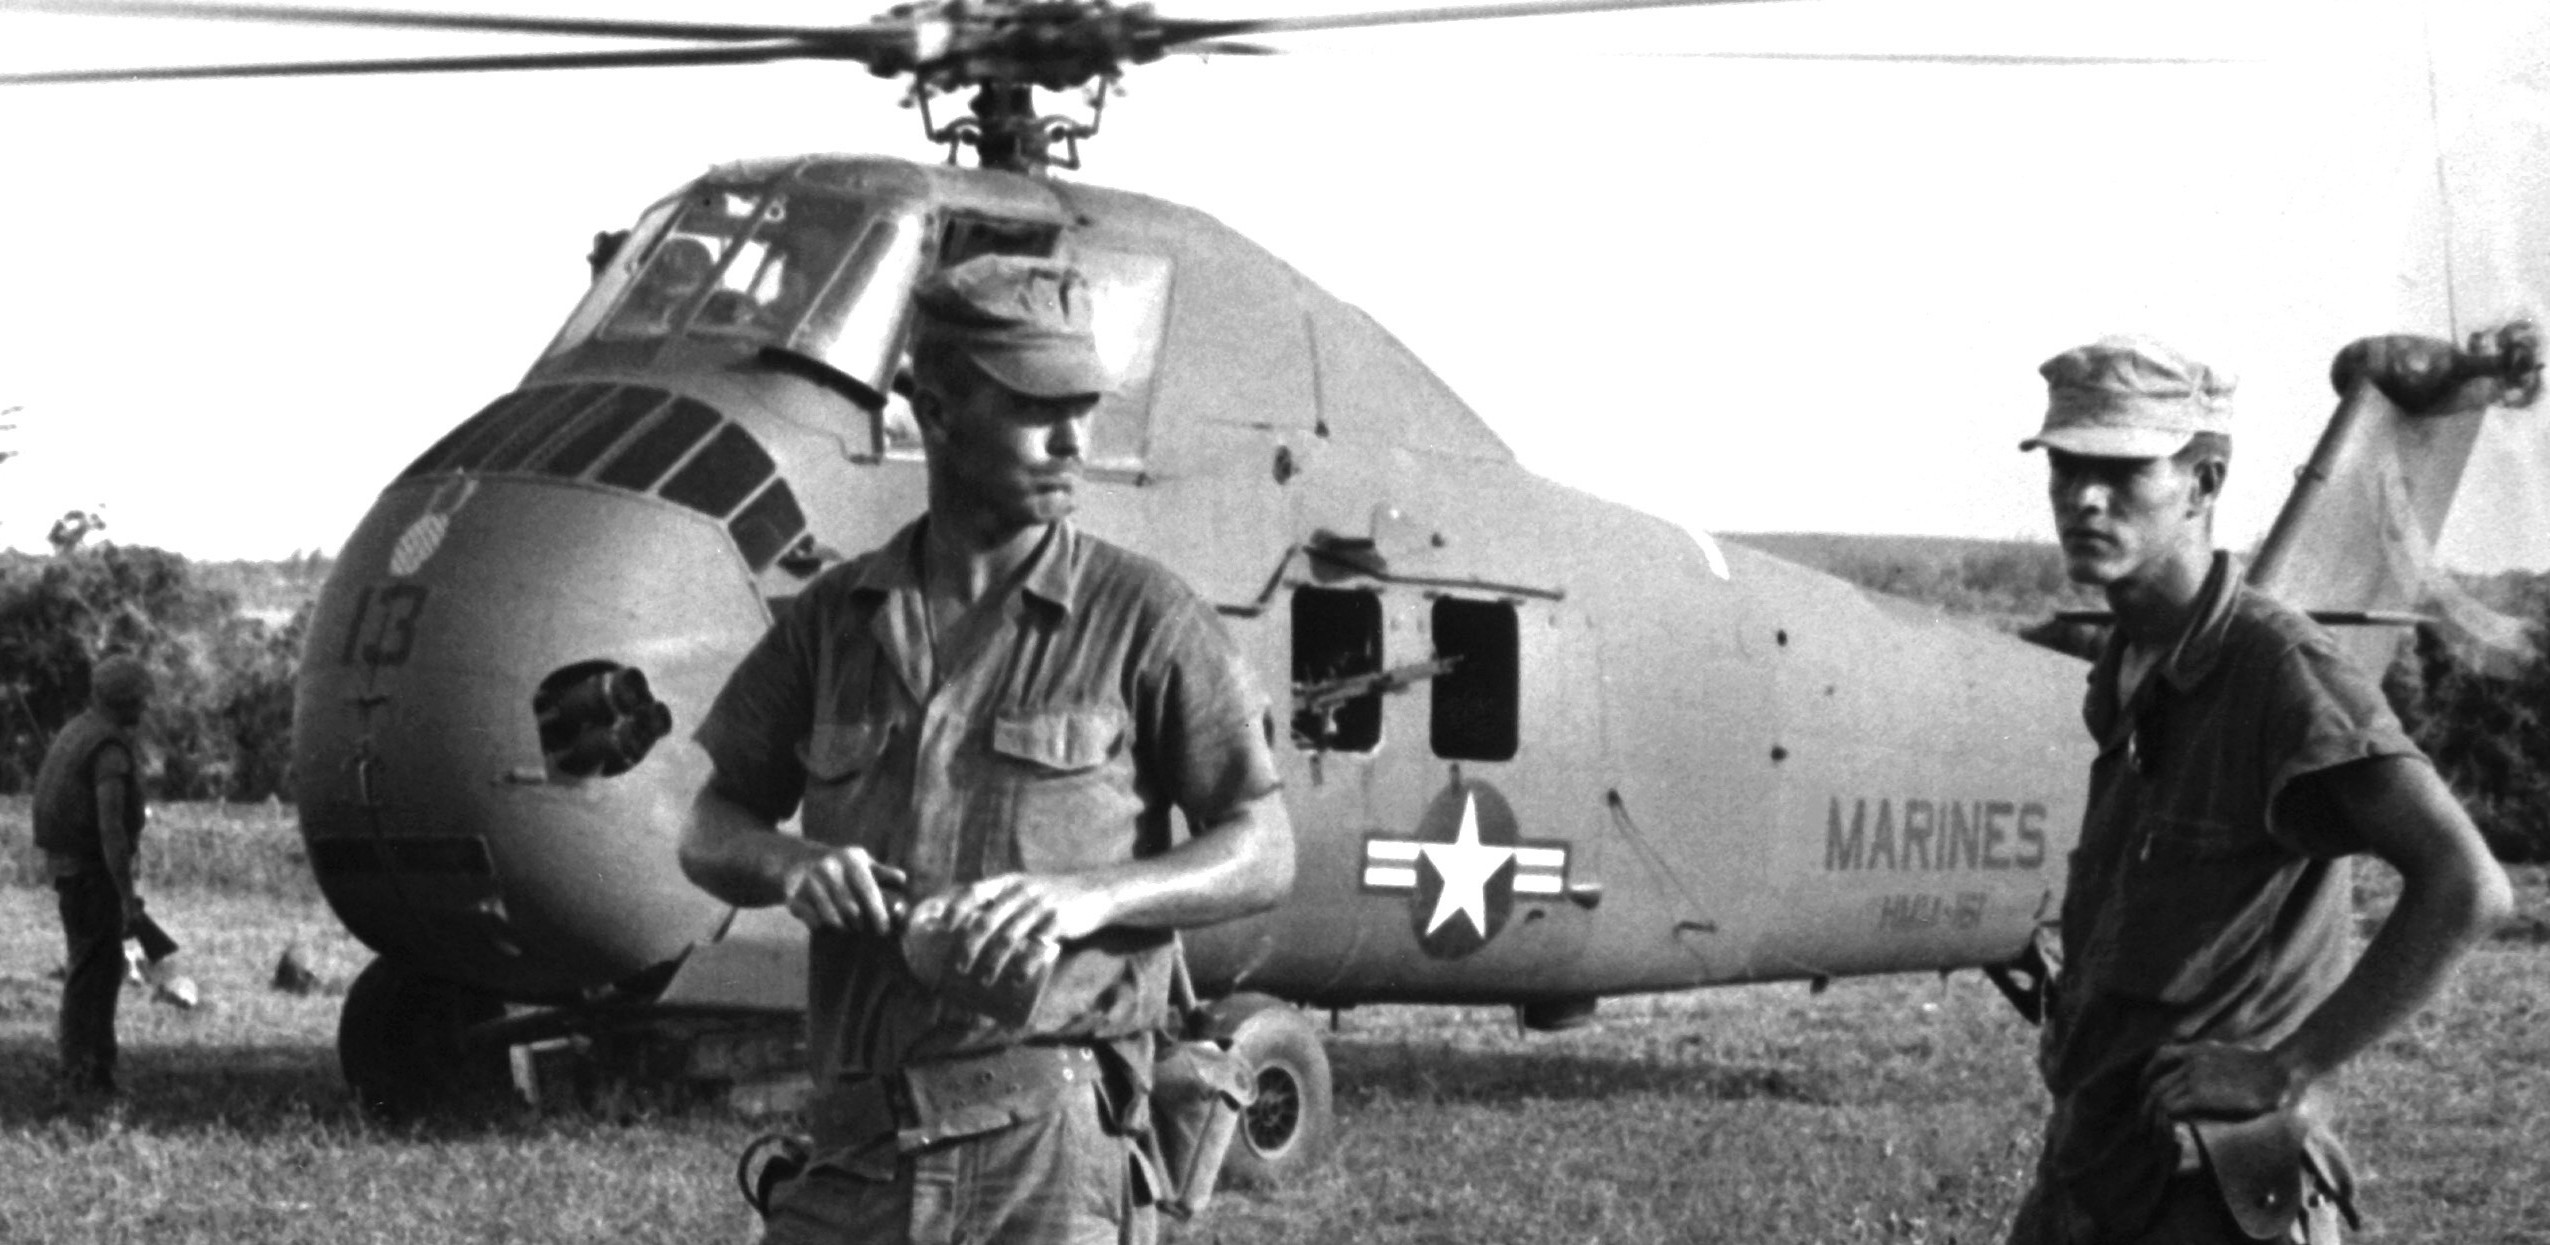 hmm-161 greyhawks marine medium helicopter squadron uh-34d usmc 18 vietnam war 1965